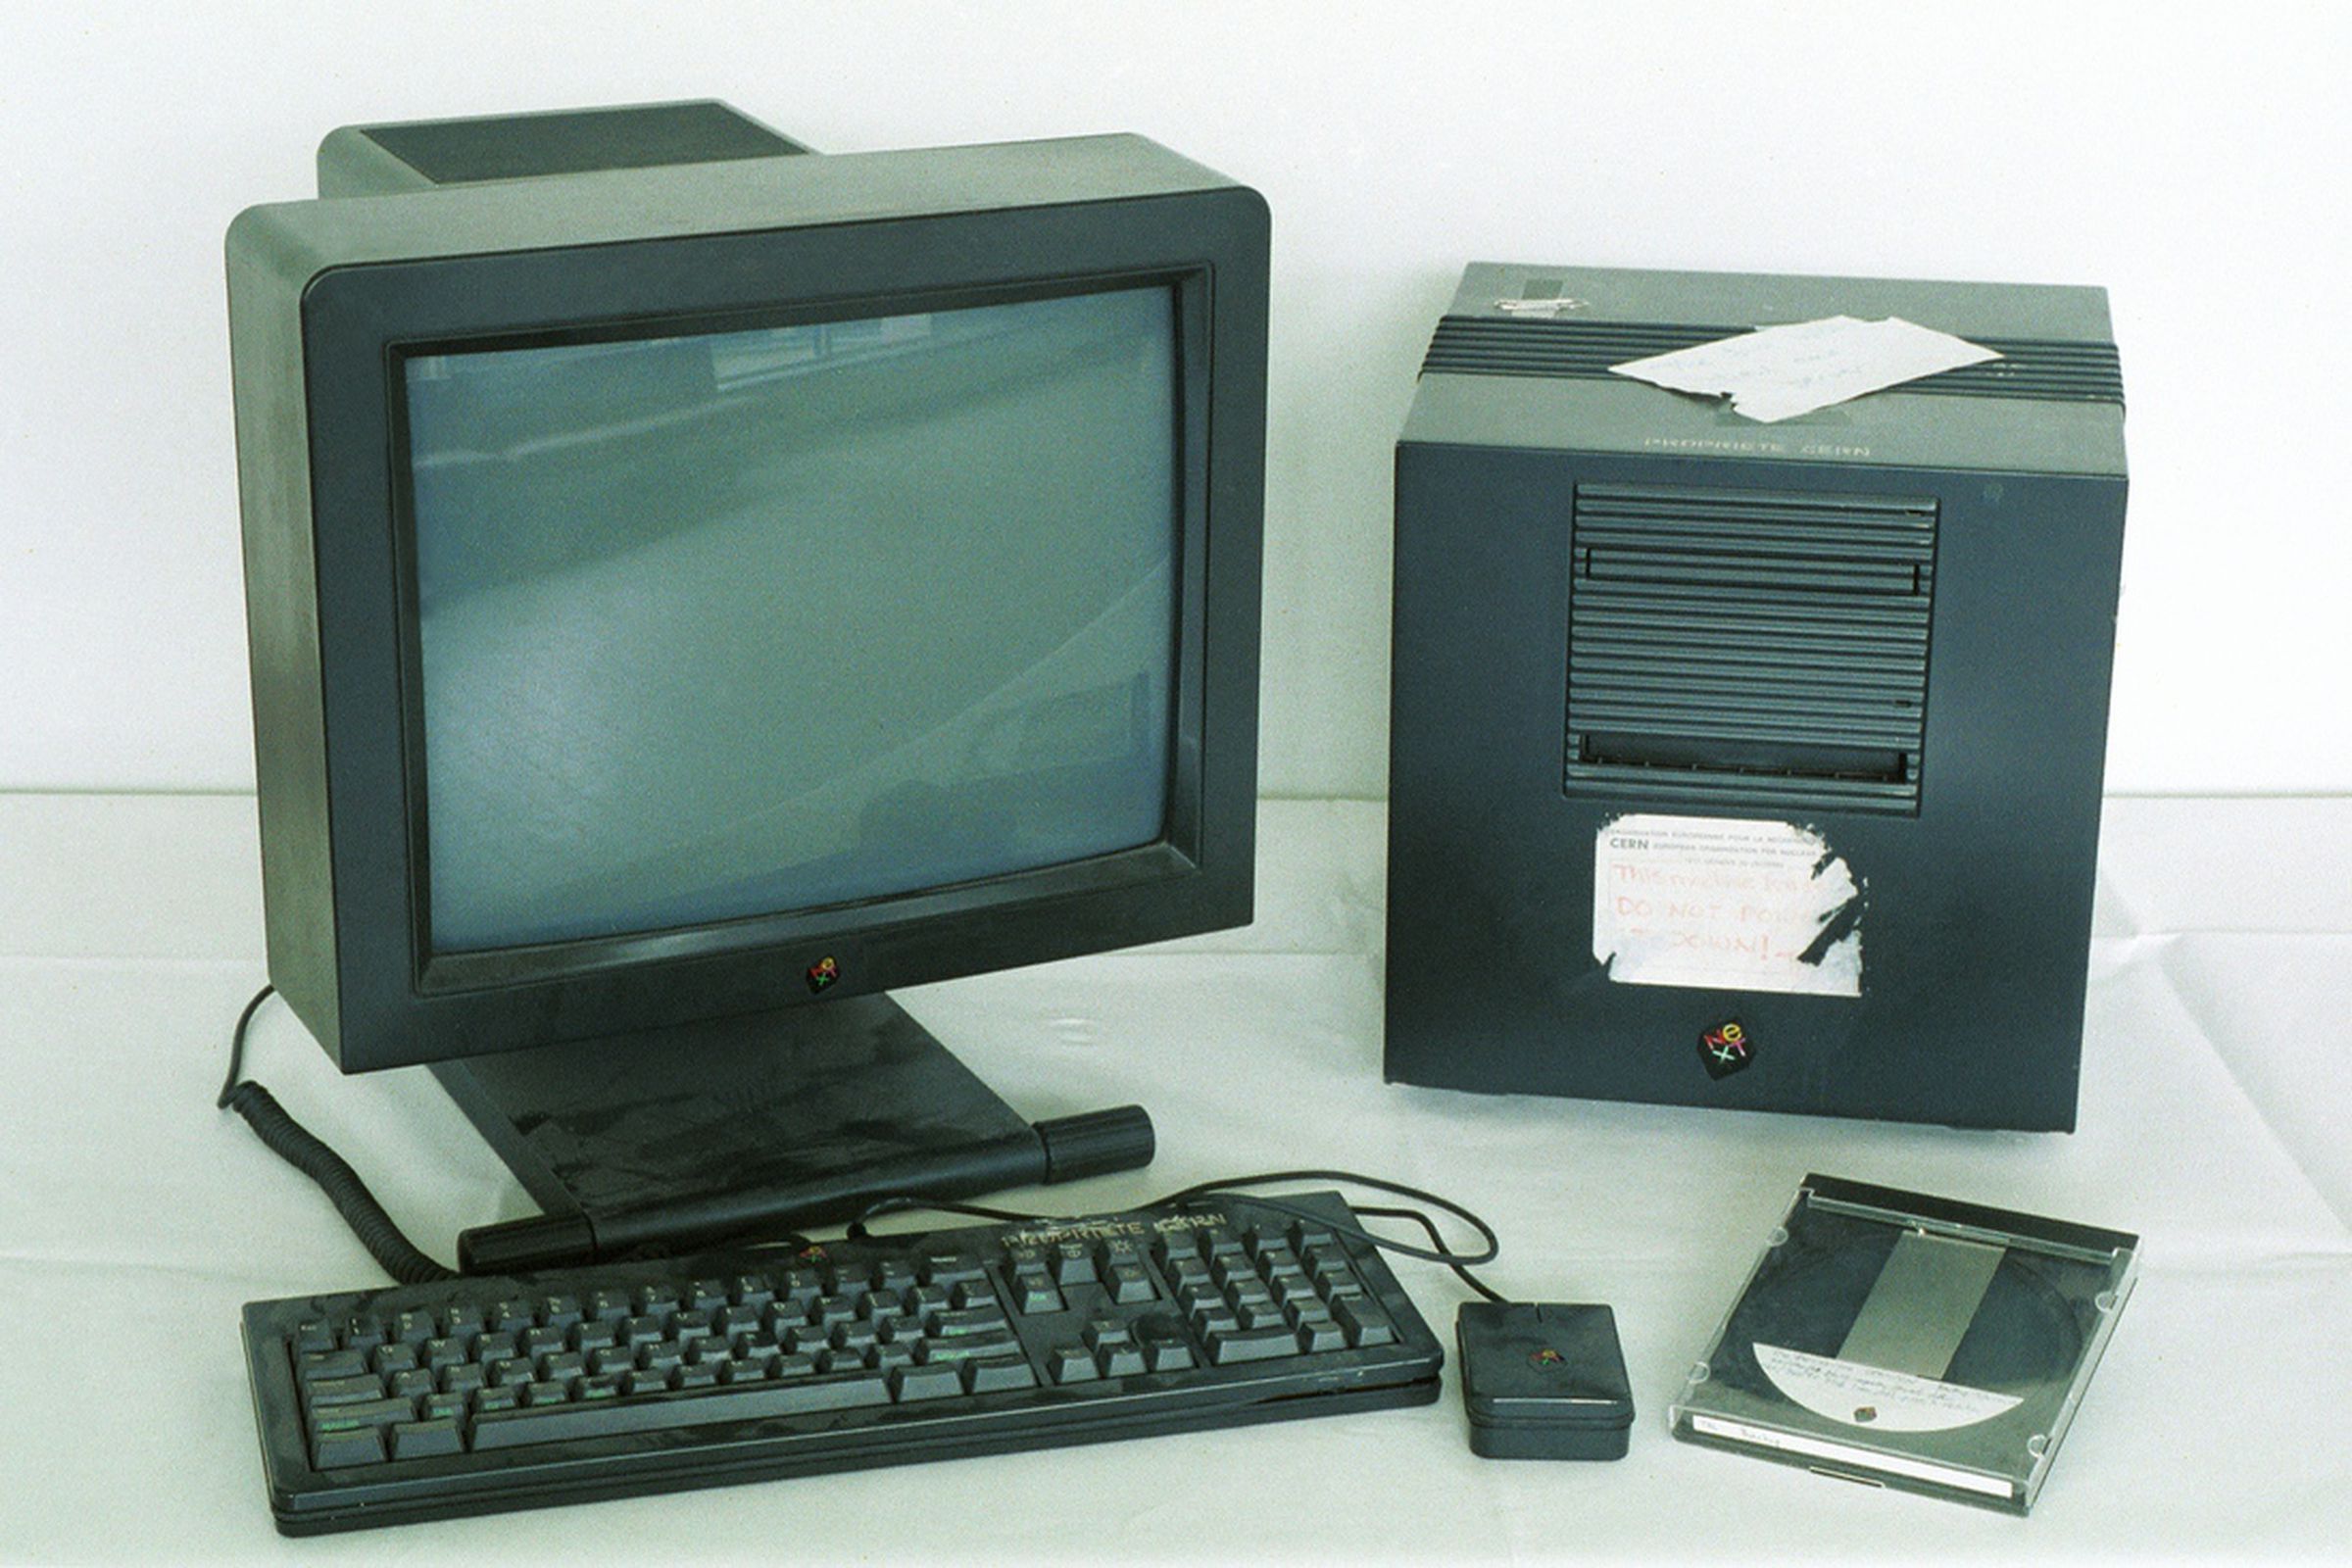 Tim Berners-Lee's NeXT computer